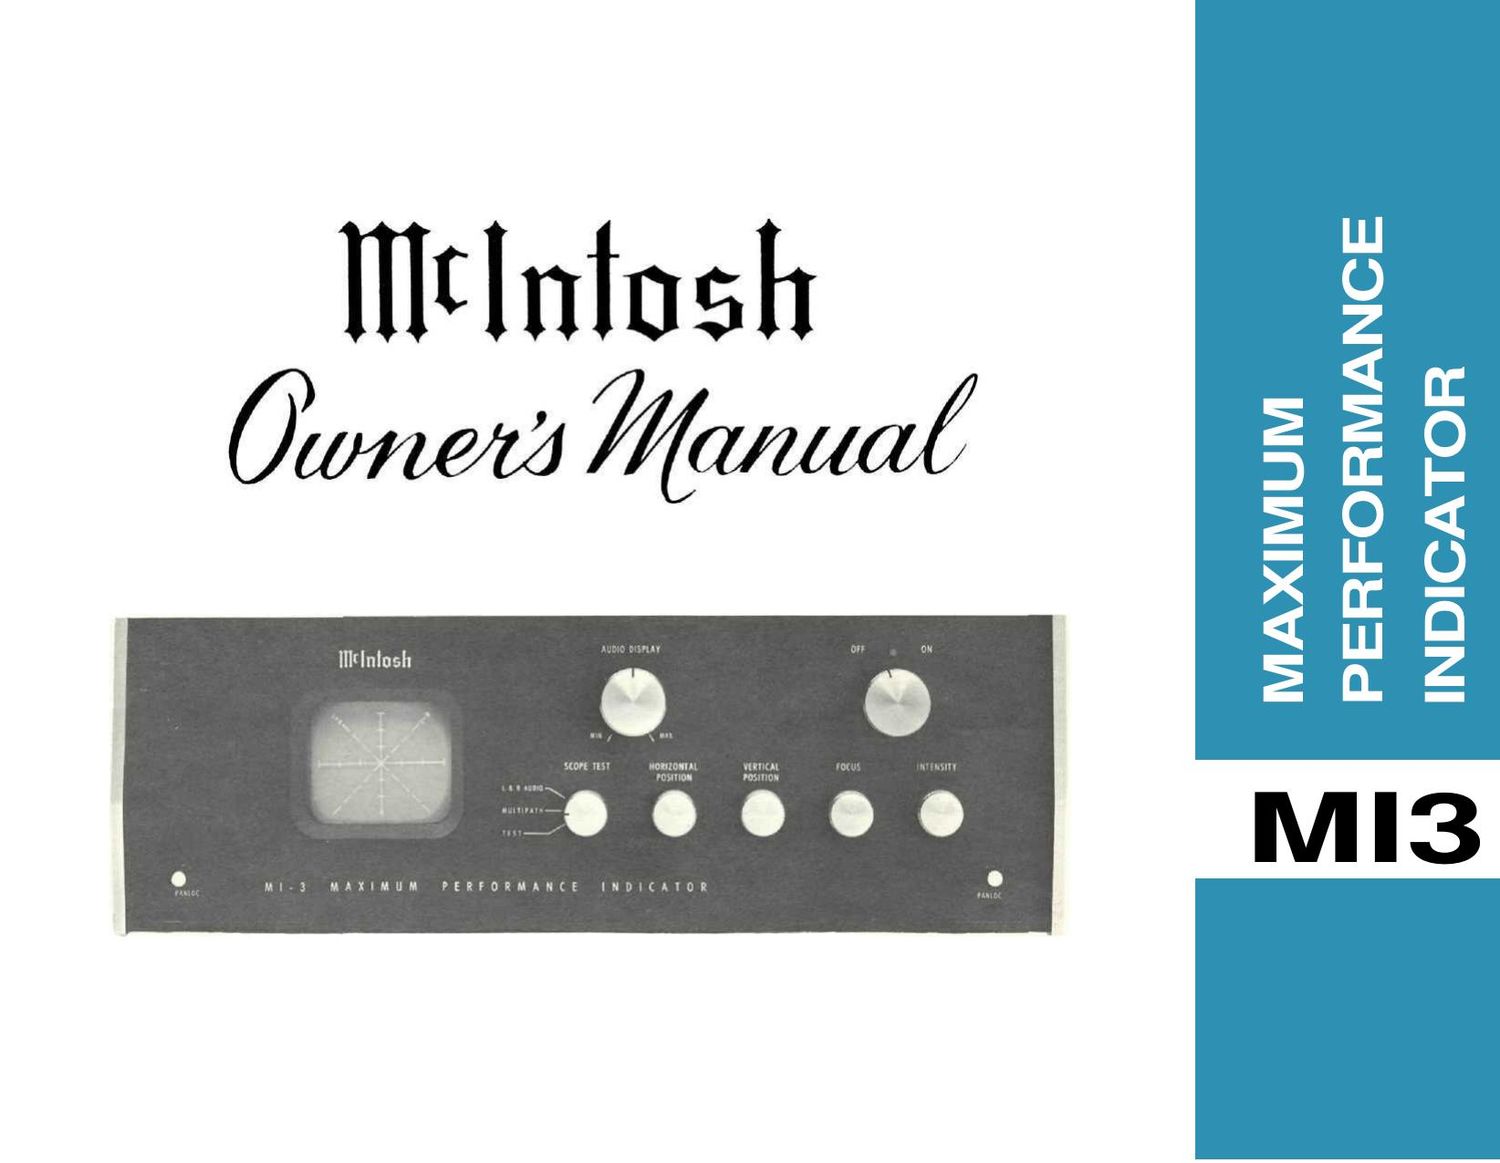 McIntosh MI 3 Owners Manual